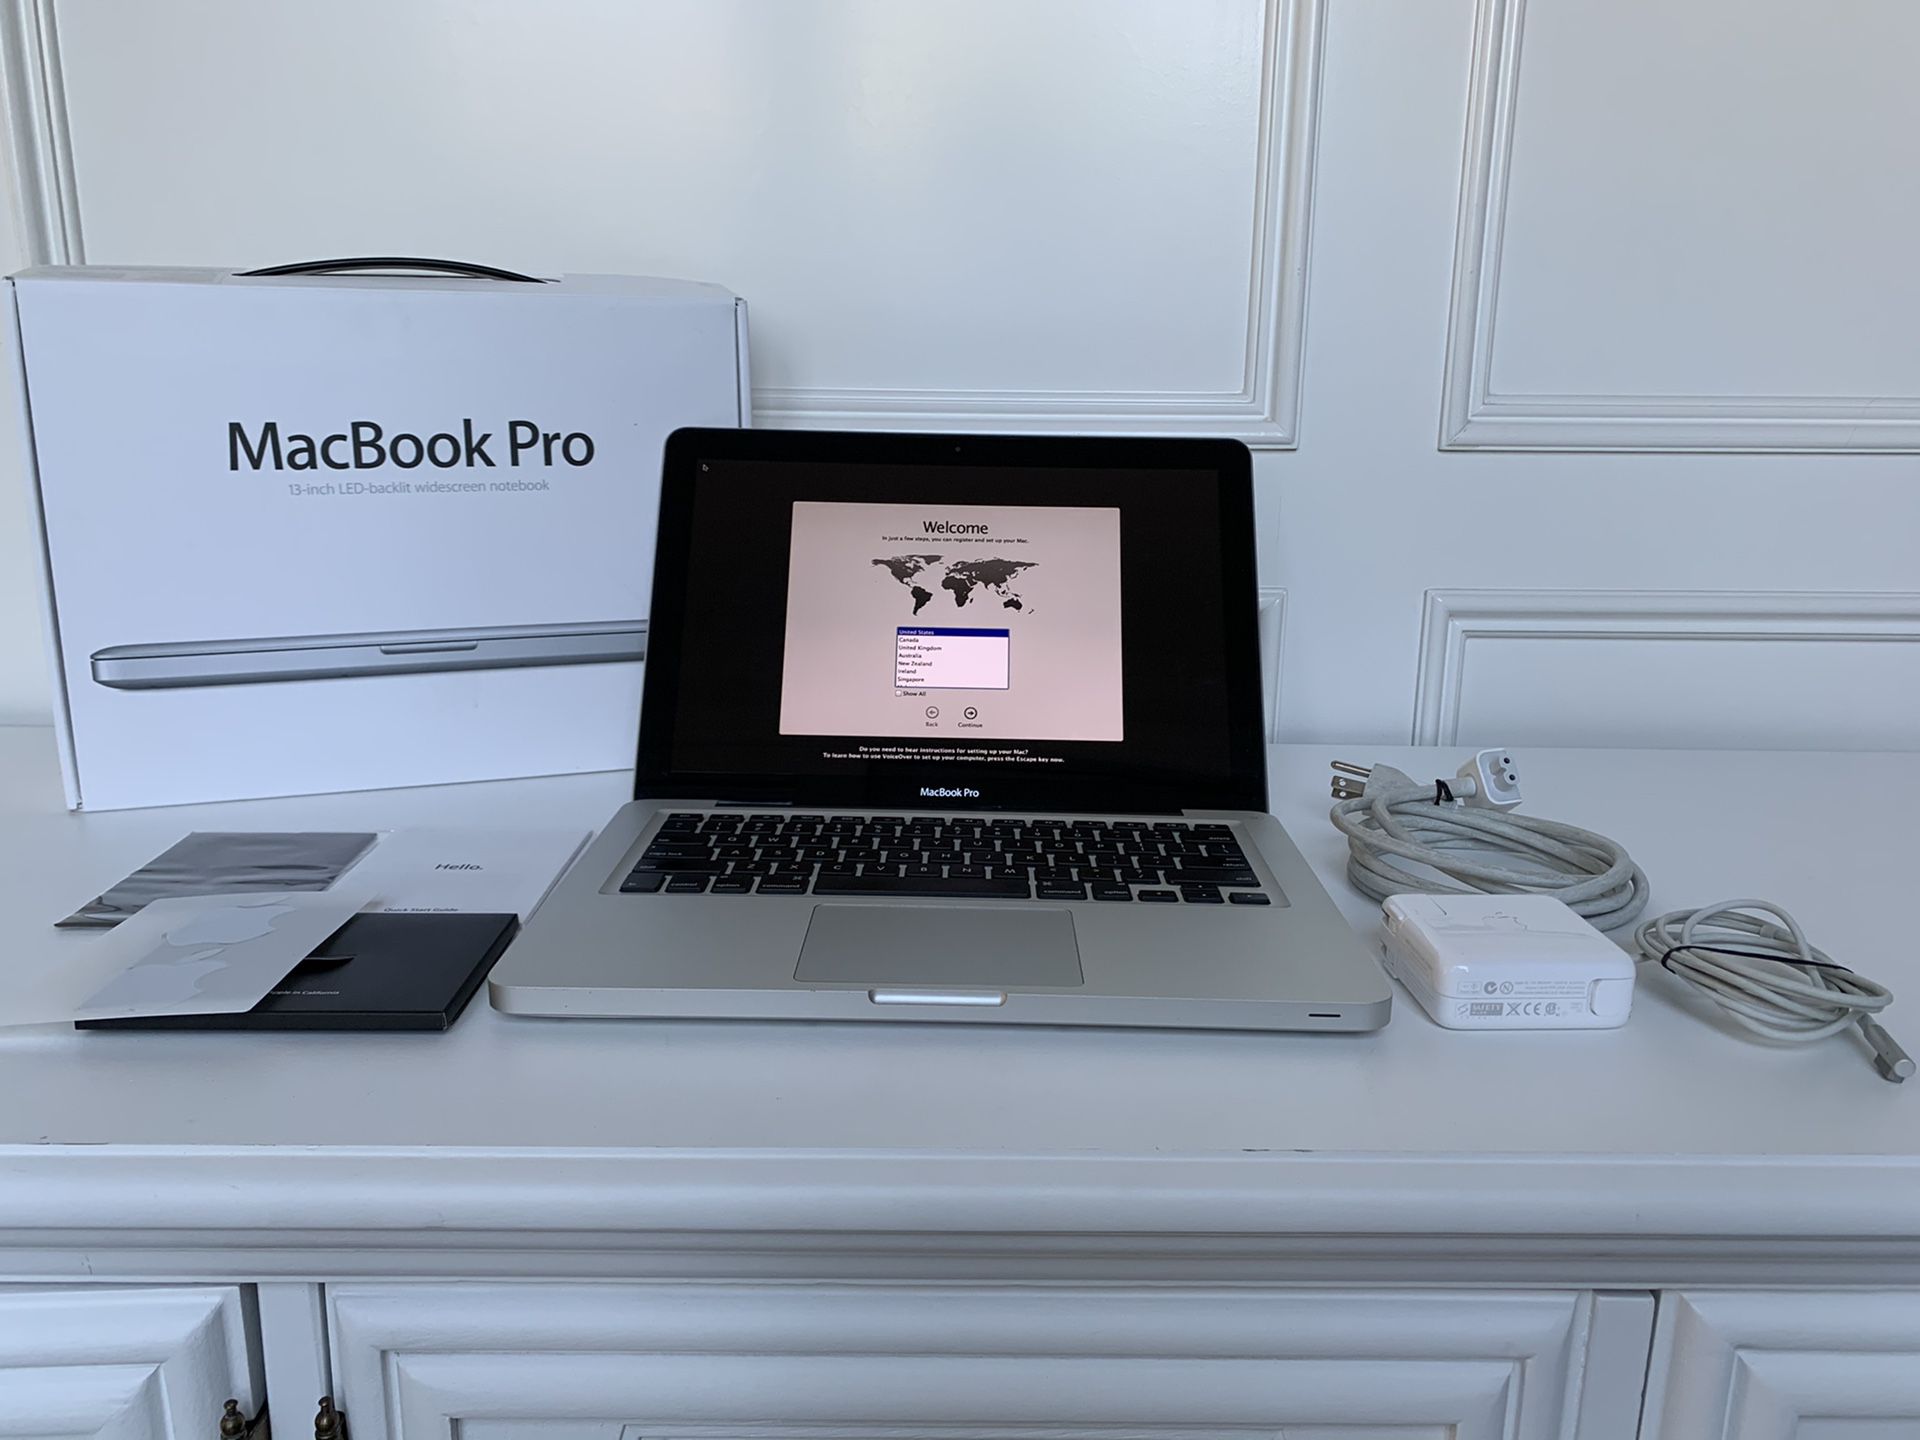 Apple MacBook Pro 13'' MD101LL/A (2012) i5 2.5GHz 16GB 500GB 9/10 COND w/Box